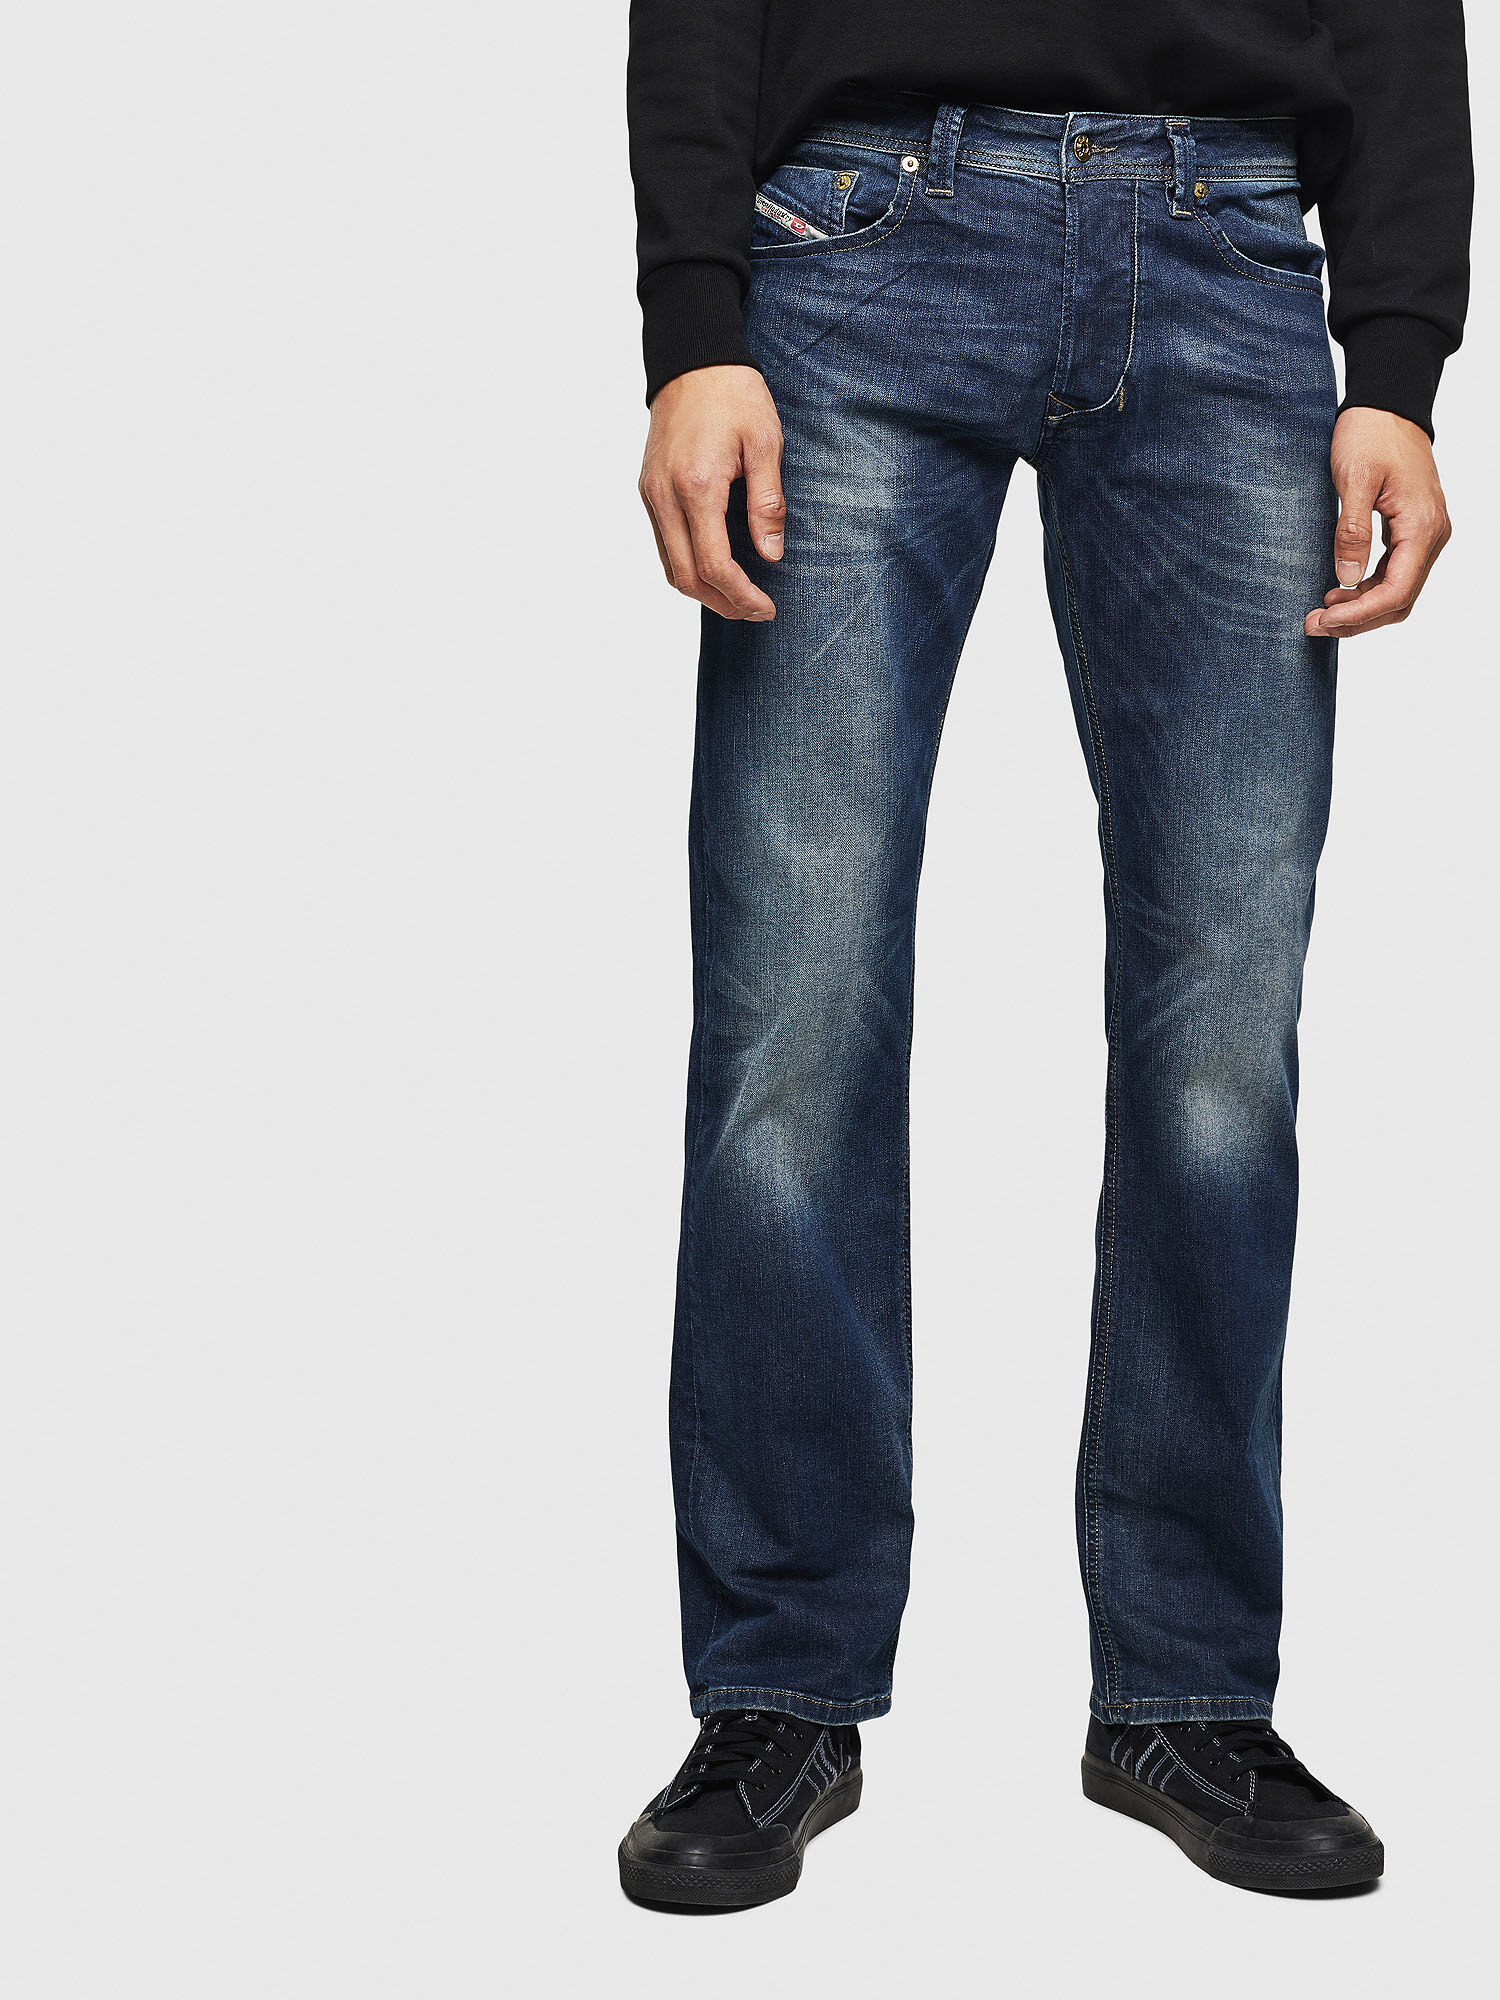 Diesel Jeans Size Chart Leg Length